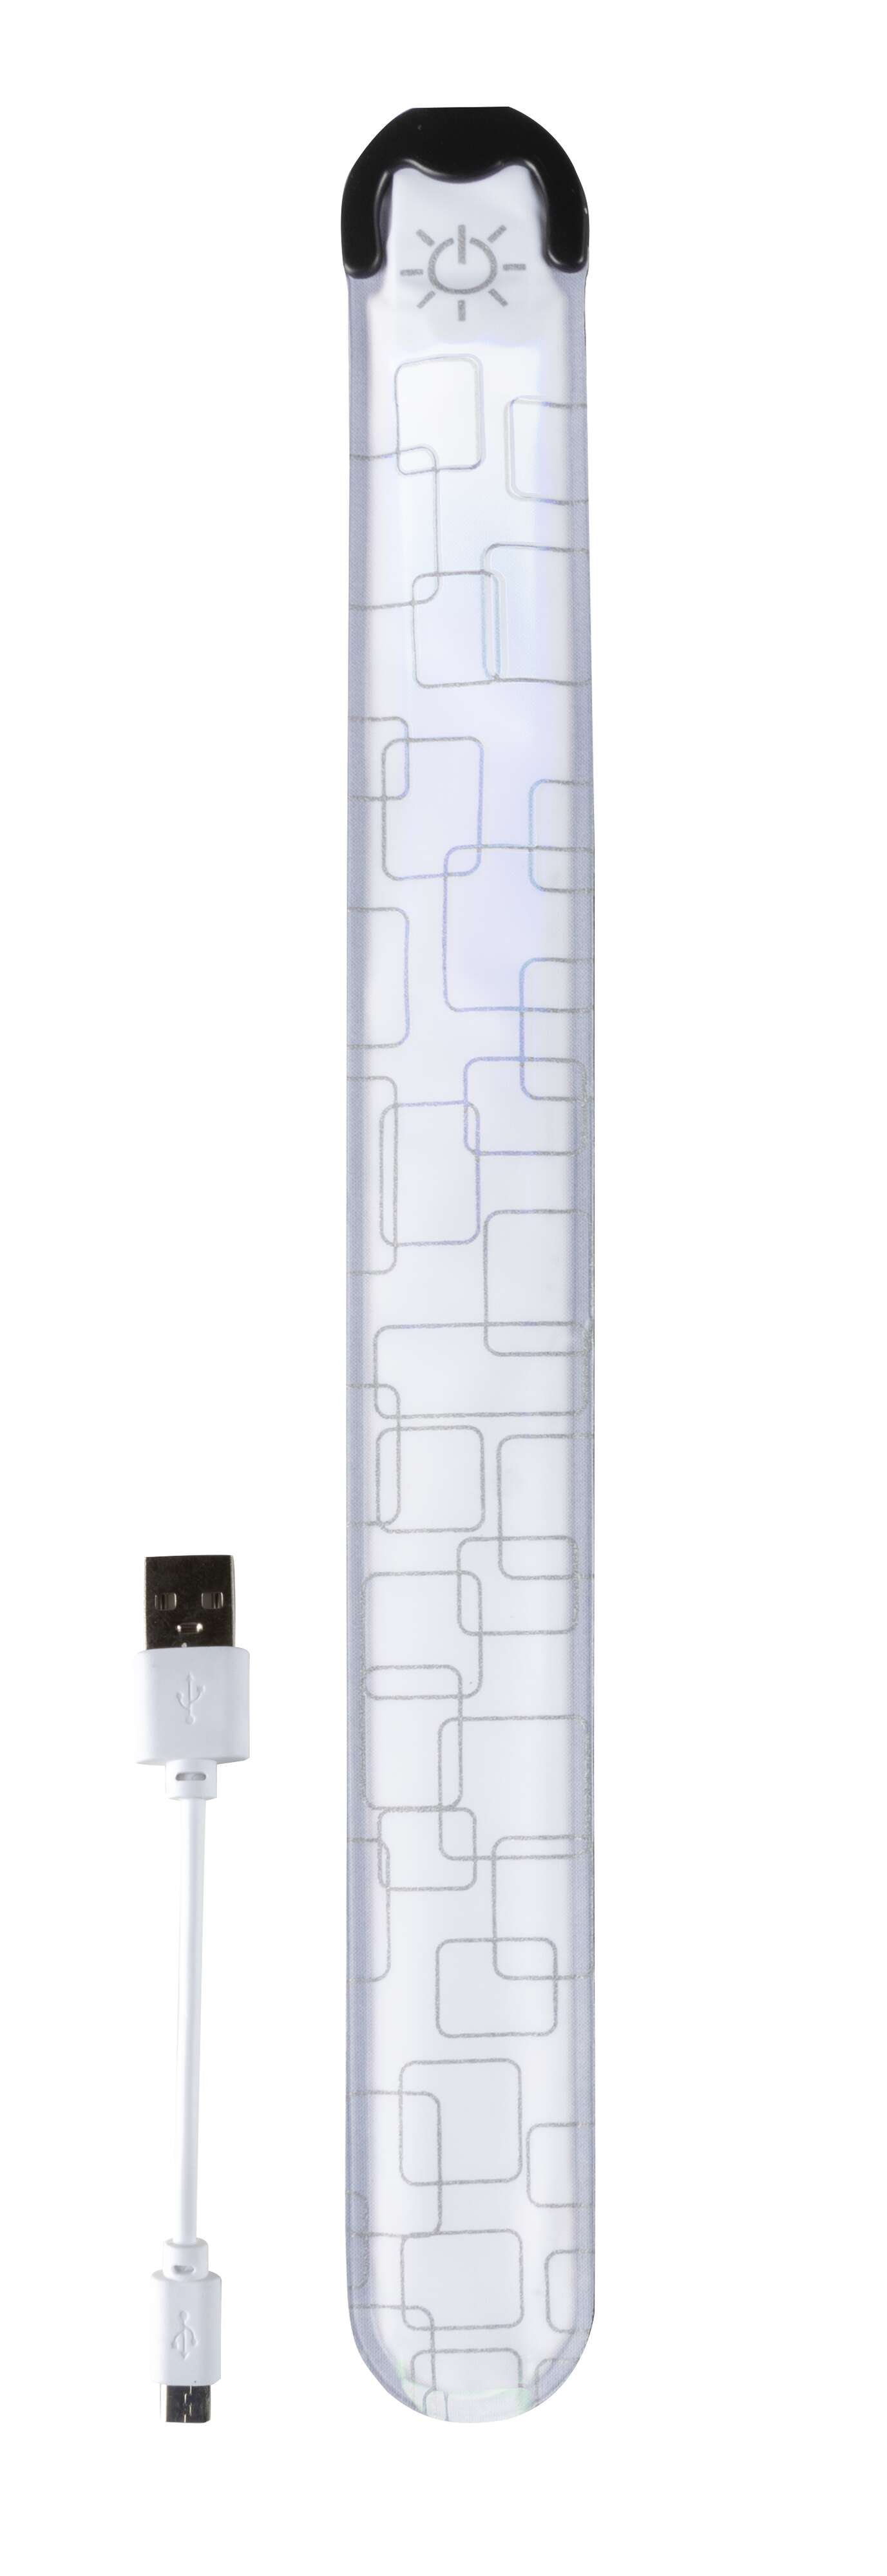 LED slap wrap, lichtgevende slap wrap met USB oplaadmogelijkheid 36x3,5 cm zilver